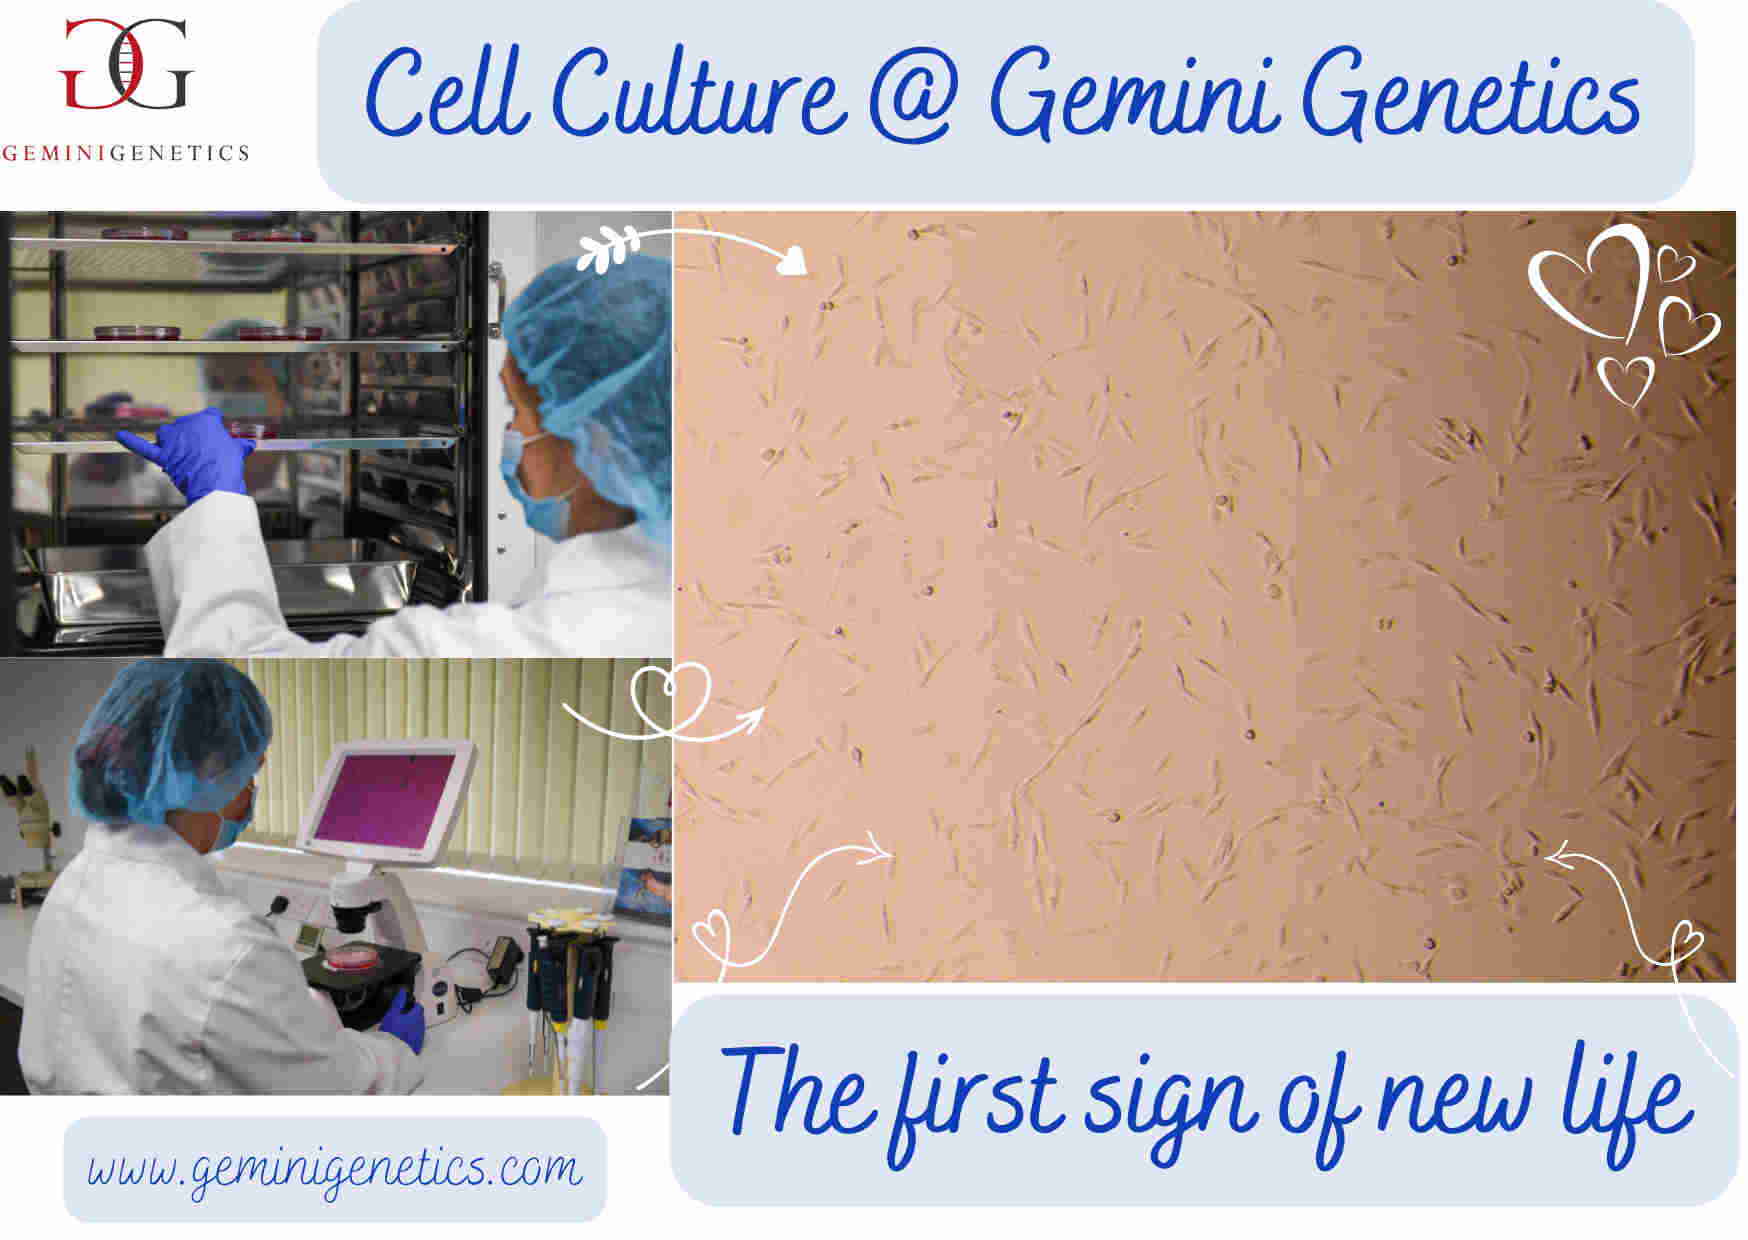 Cell Culture at Gemini Genetics